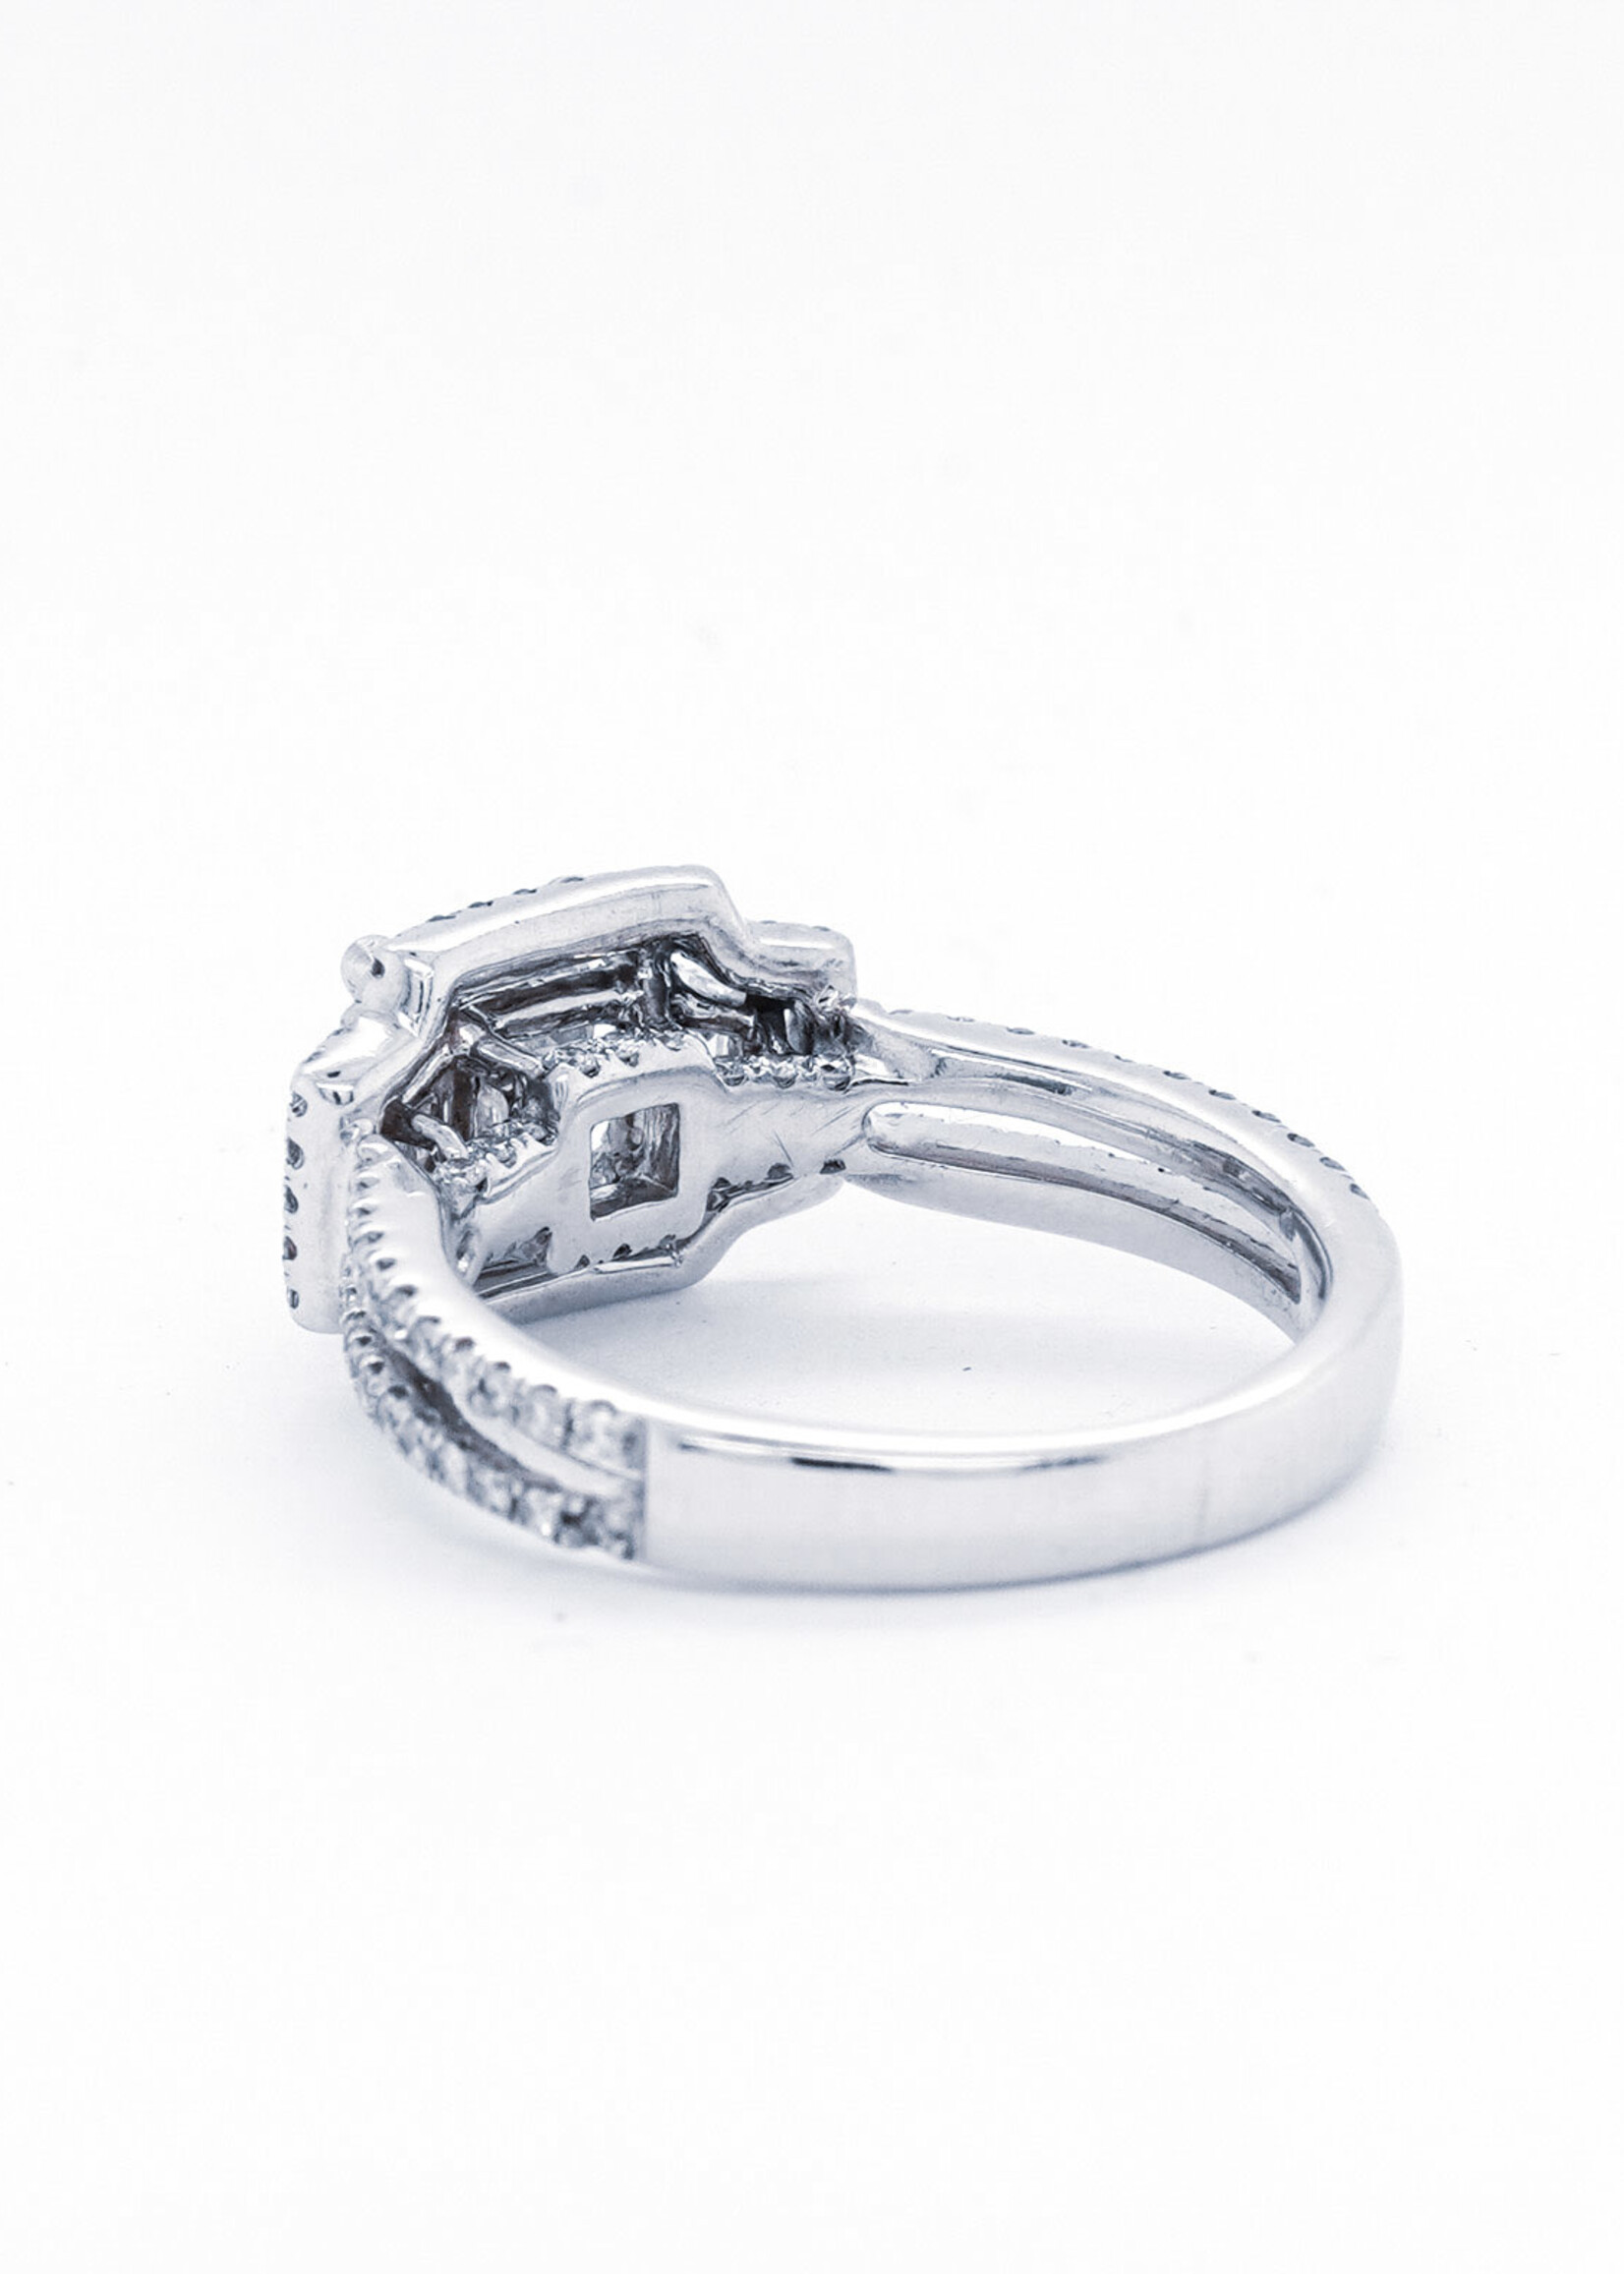 14KW 3.76g 1.81ctw (1.03ctr) I/I1 Emerald Cut Diamond Three Stone Halo Engagement Ring (size 5)